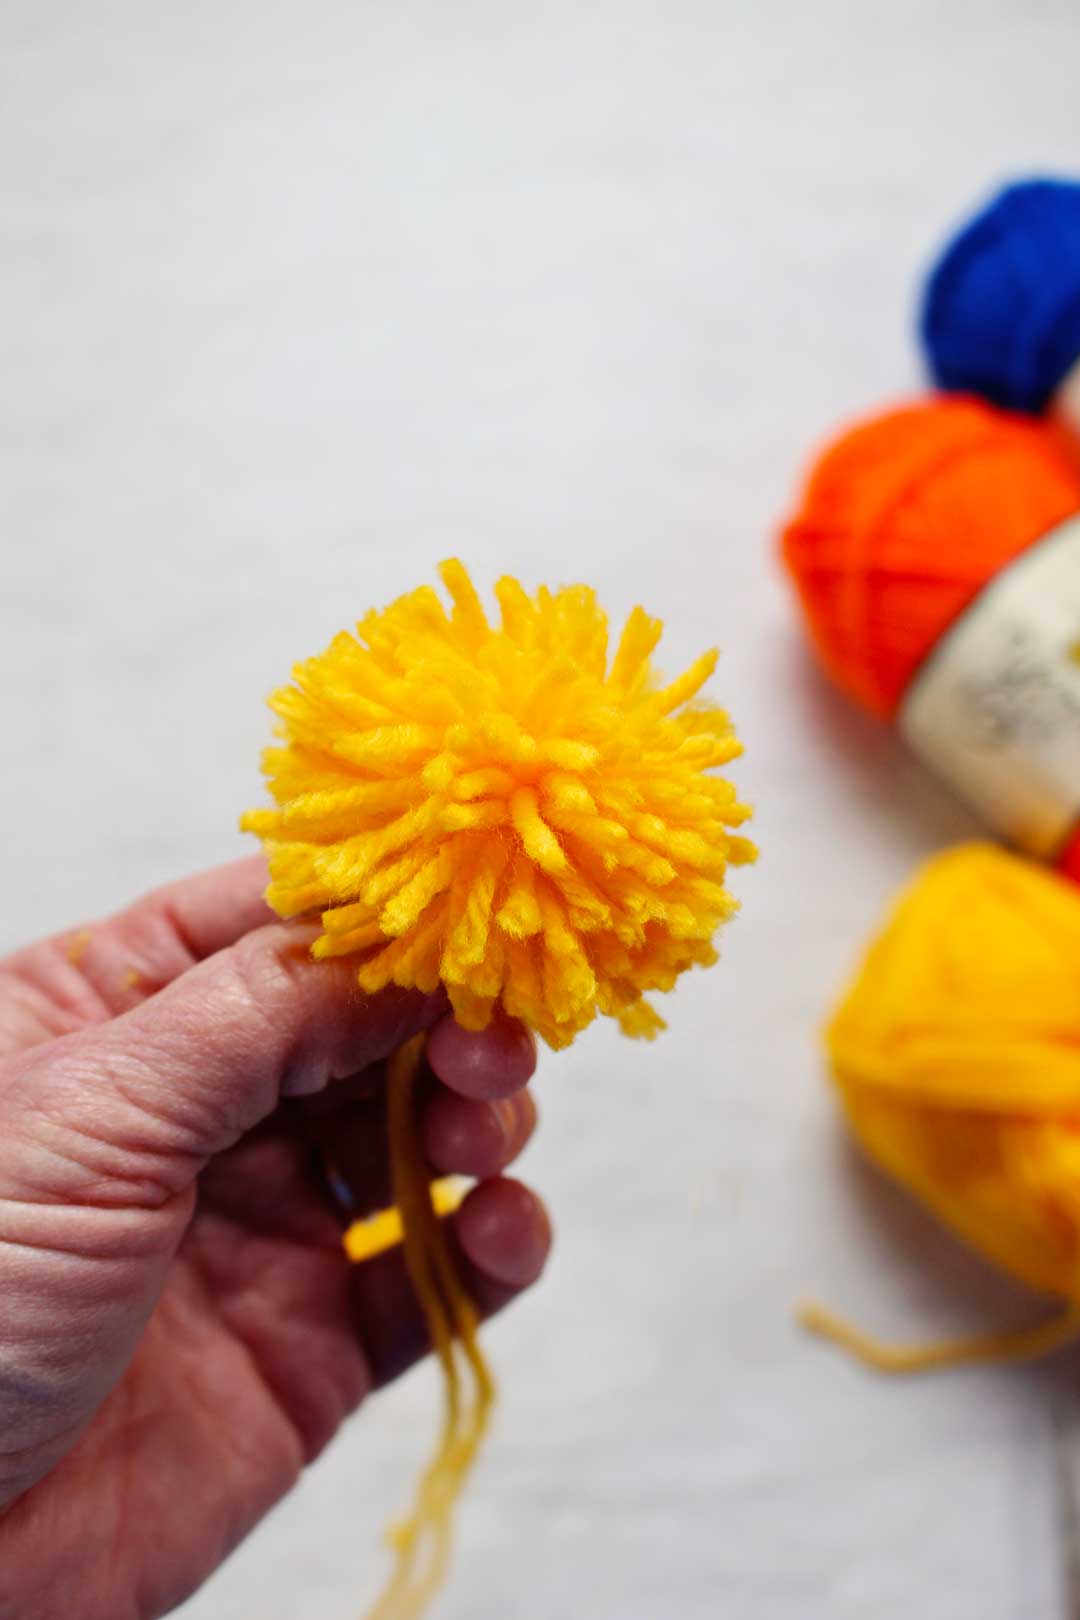 A yellow pom pom made from yarn.